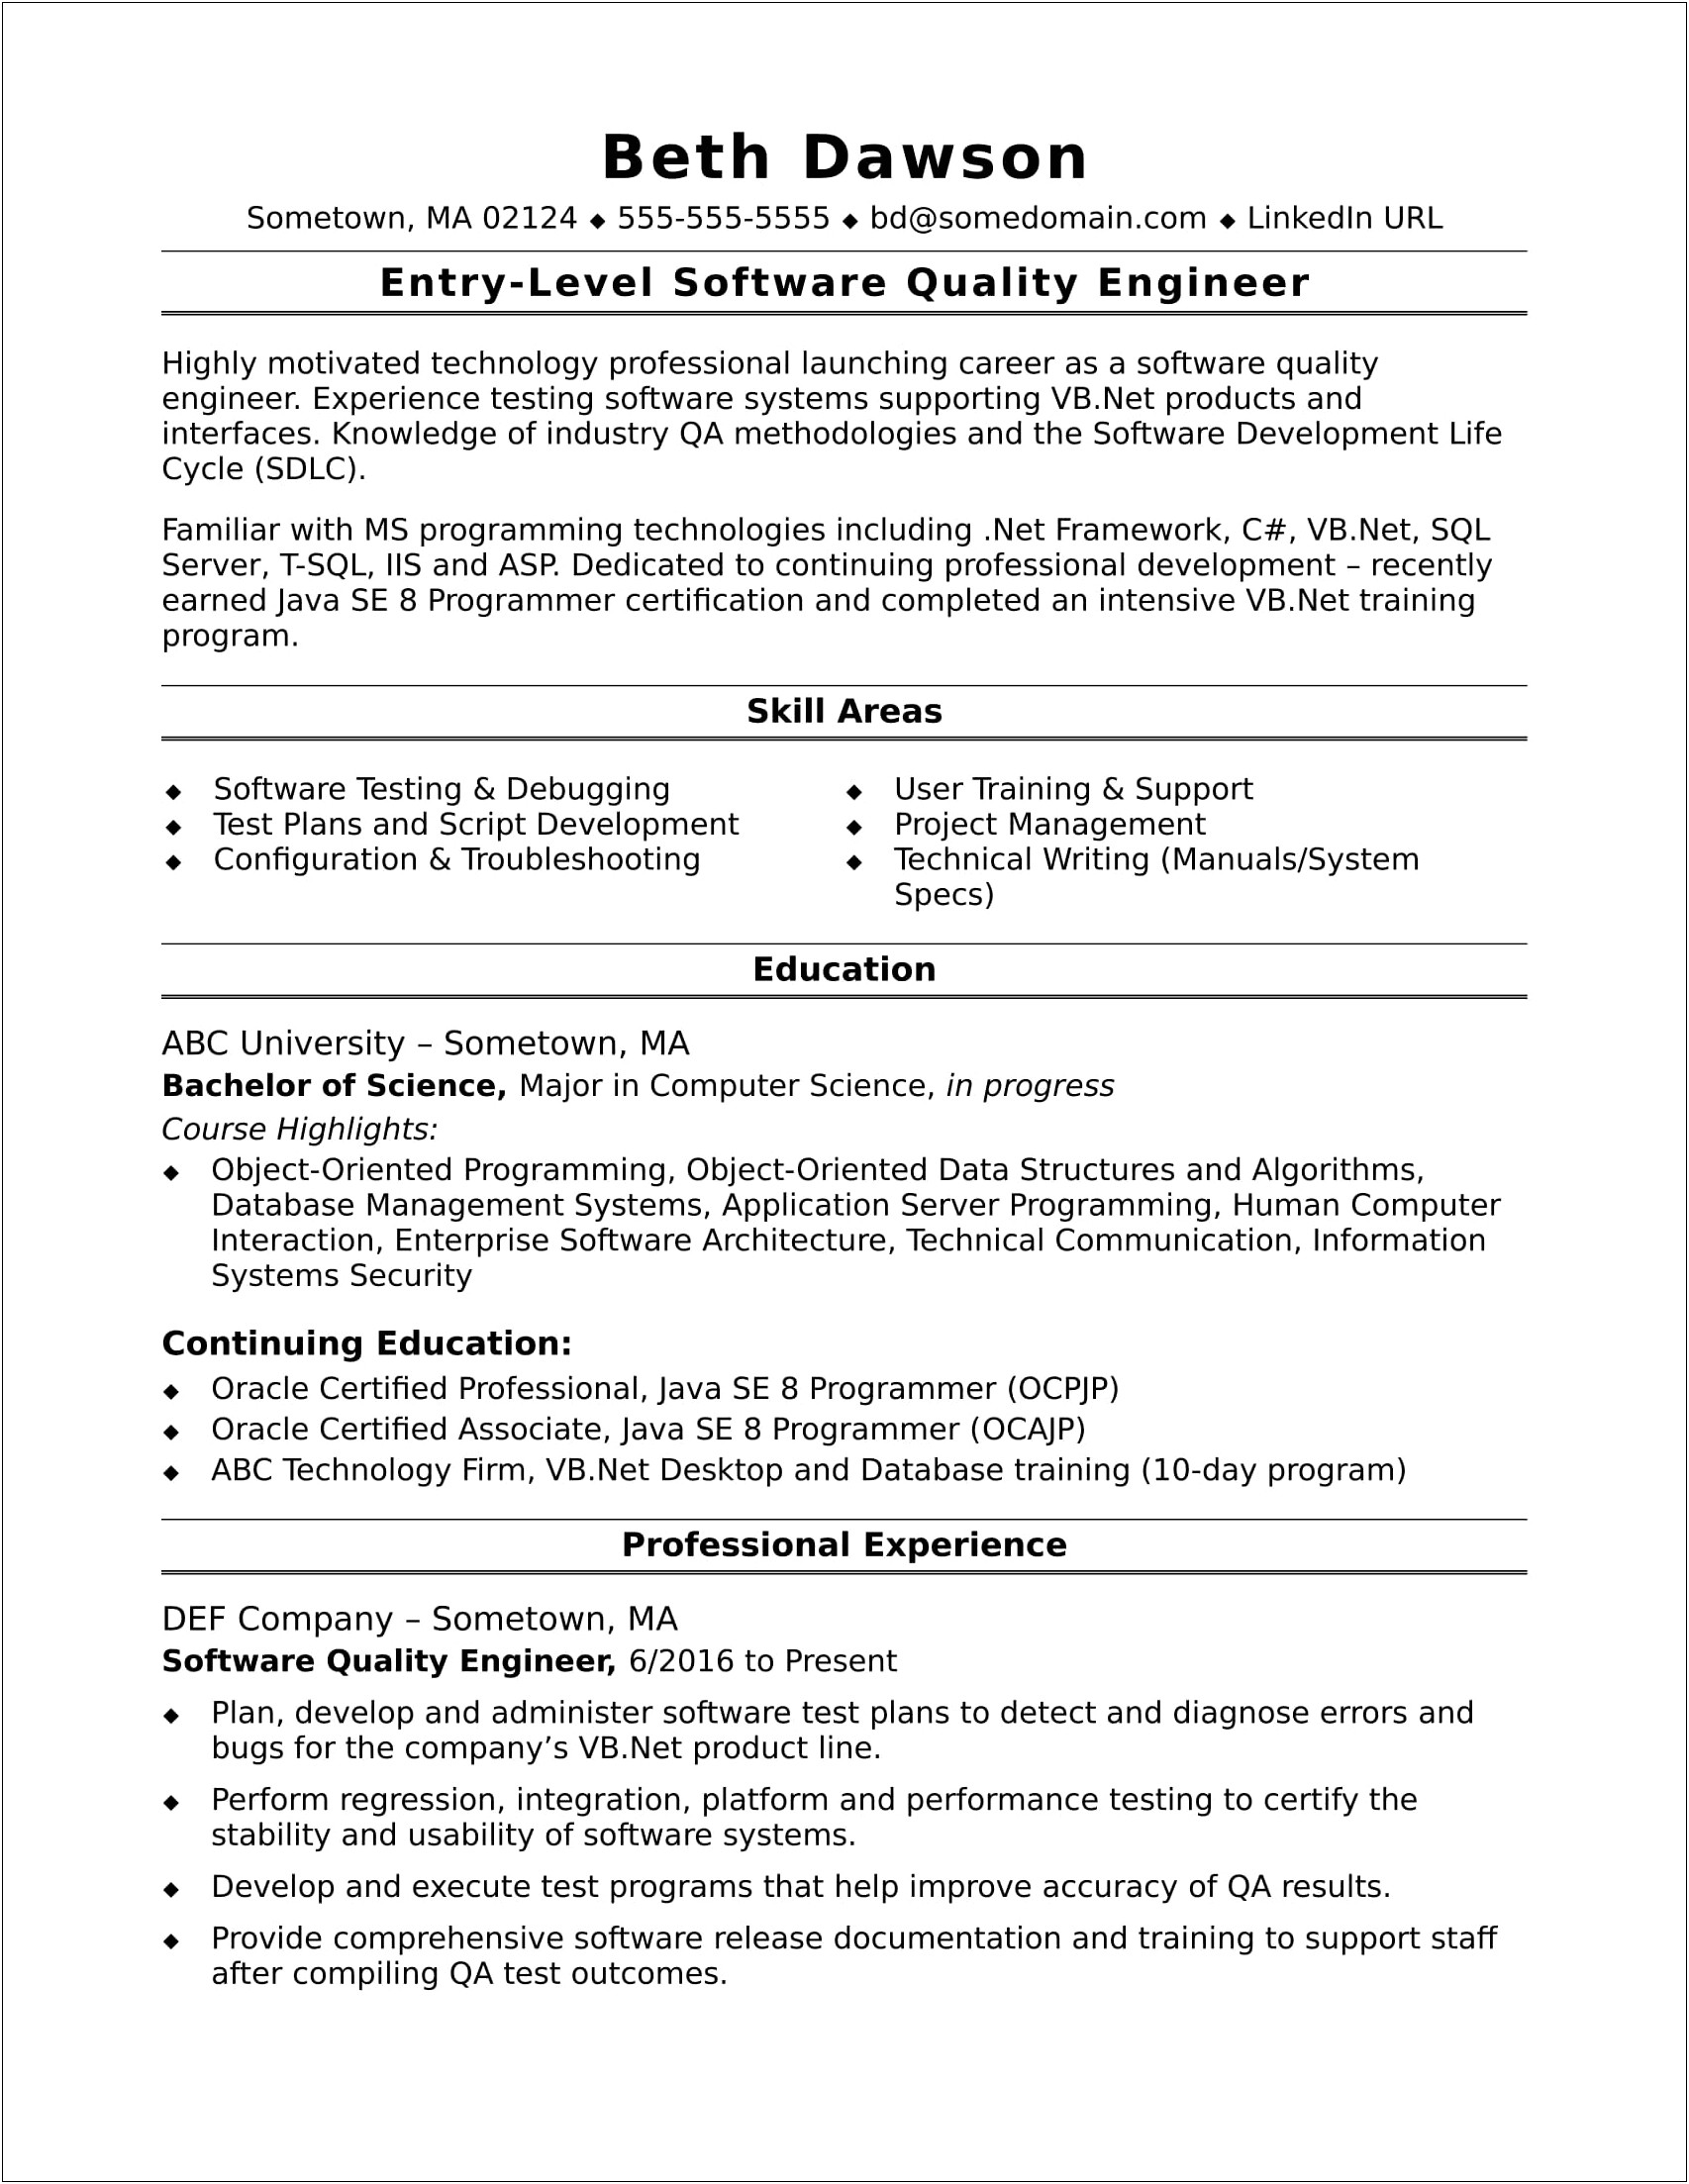 Sample Resume Information Technology Entry Level